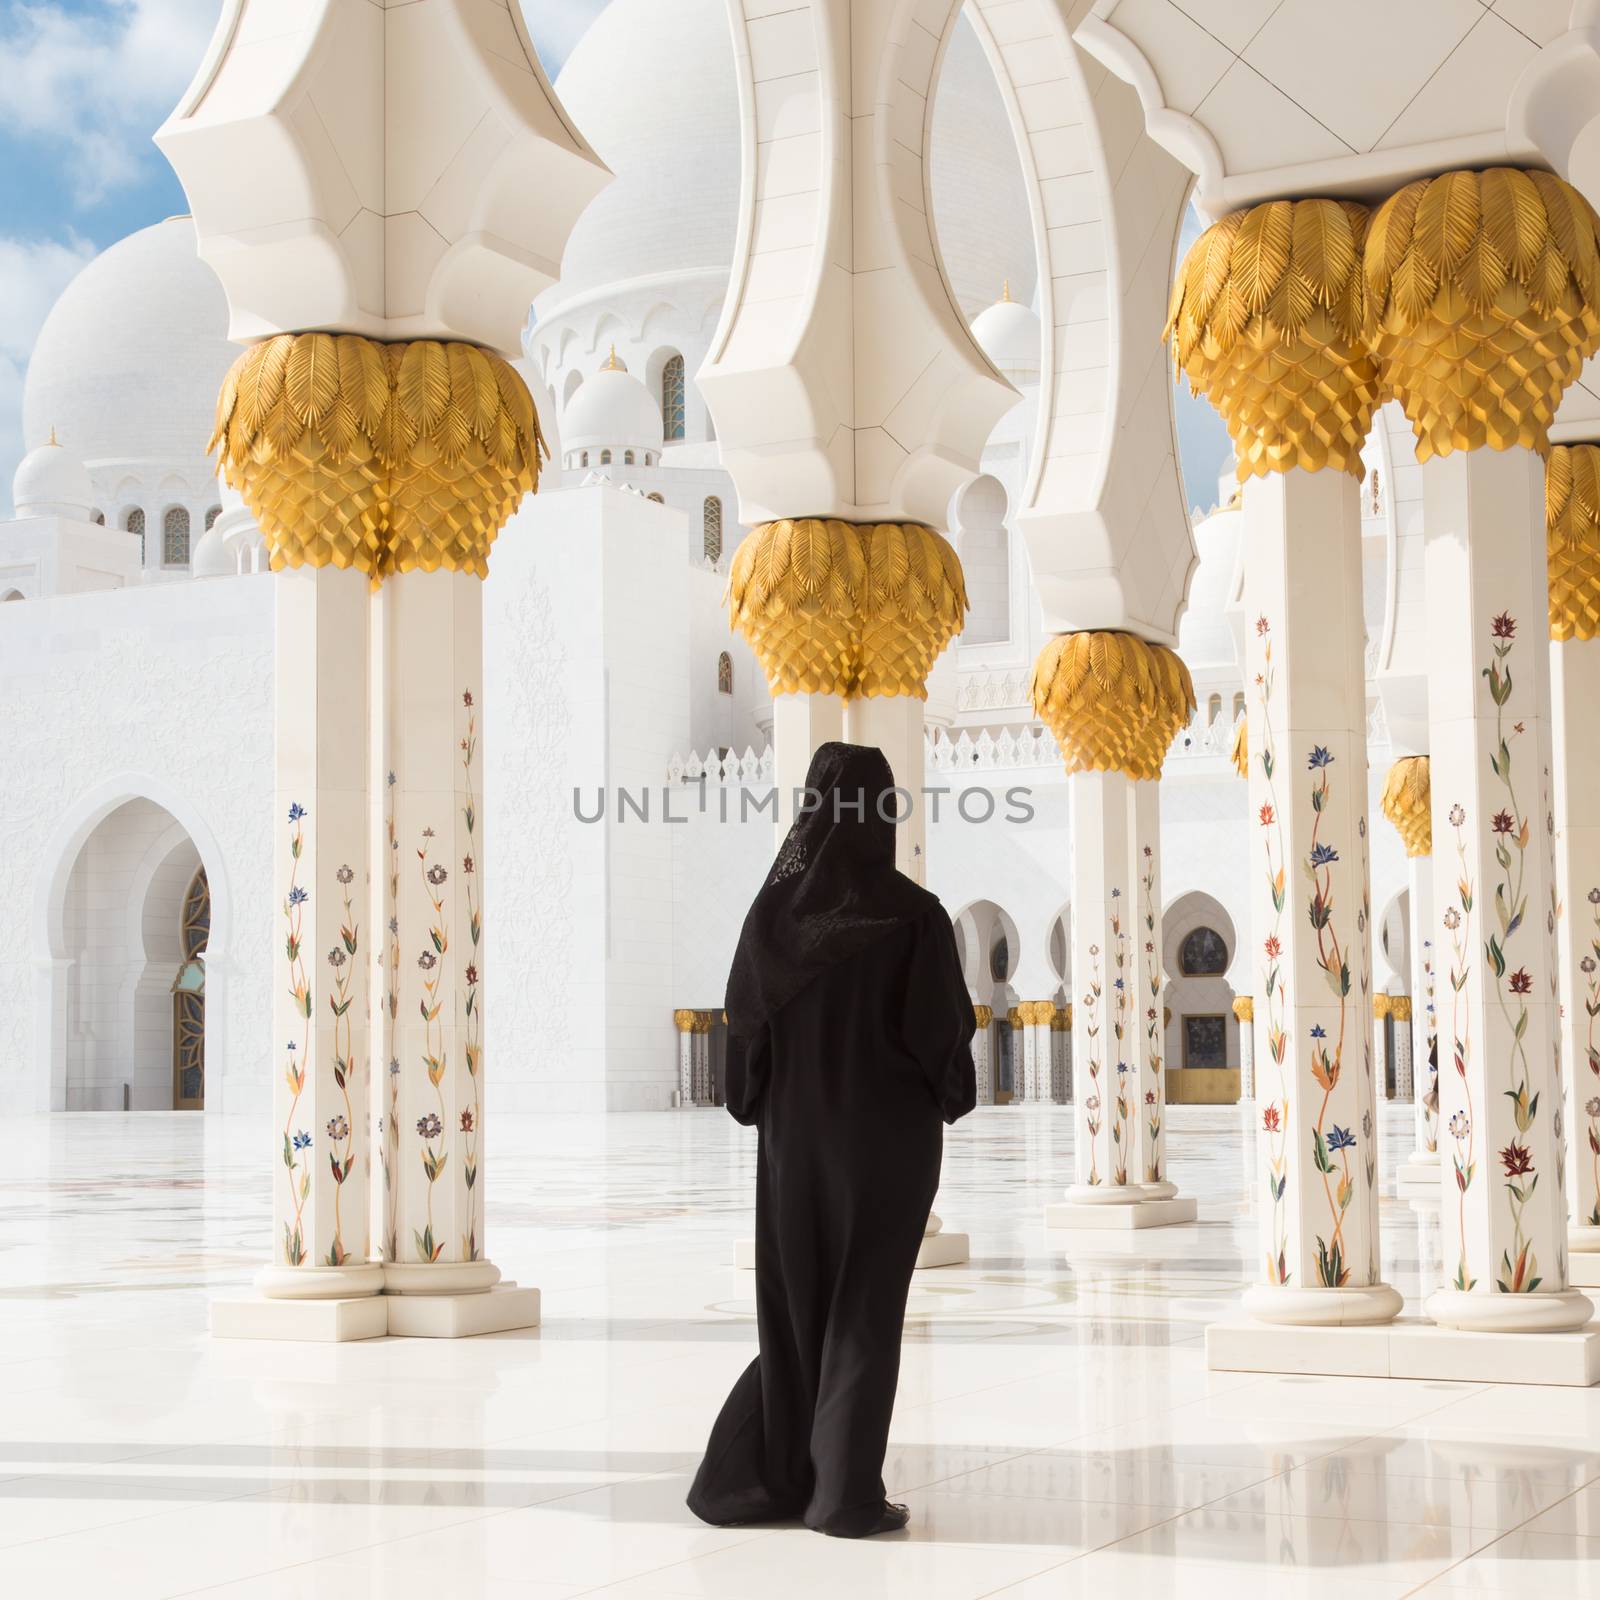 Traditionally dressed arabic woman wearing black burka wisiting Sheikh Zayed Grand Mosque in Abu Dhabi, United Arab Emirates.